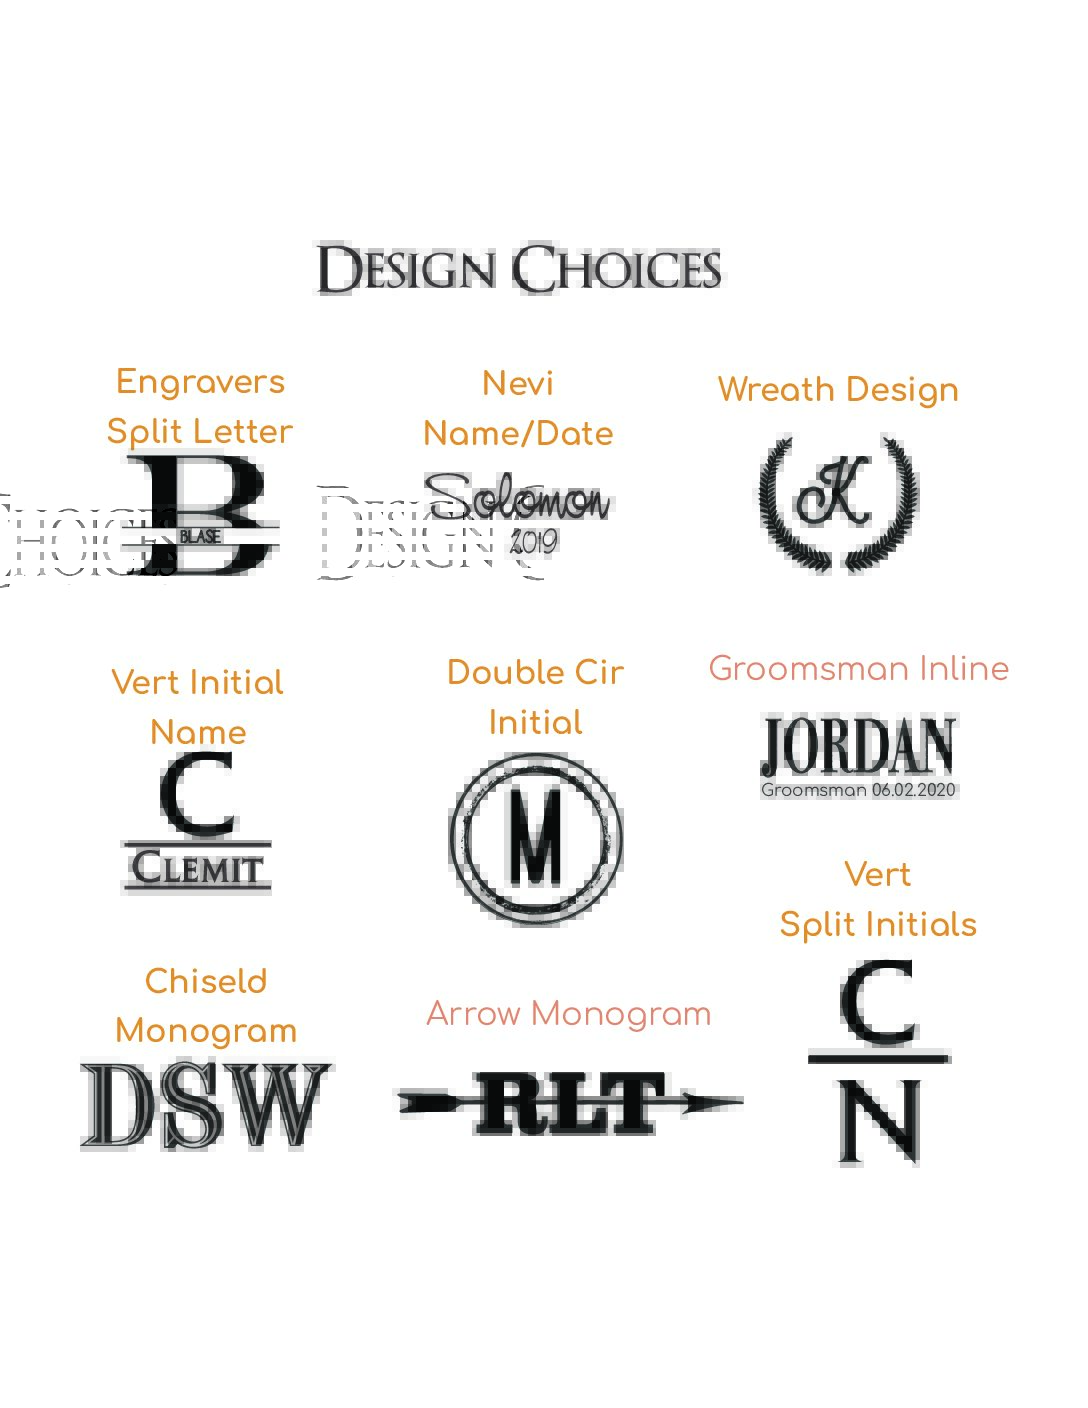 Men’s Design Choices